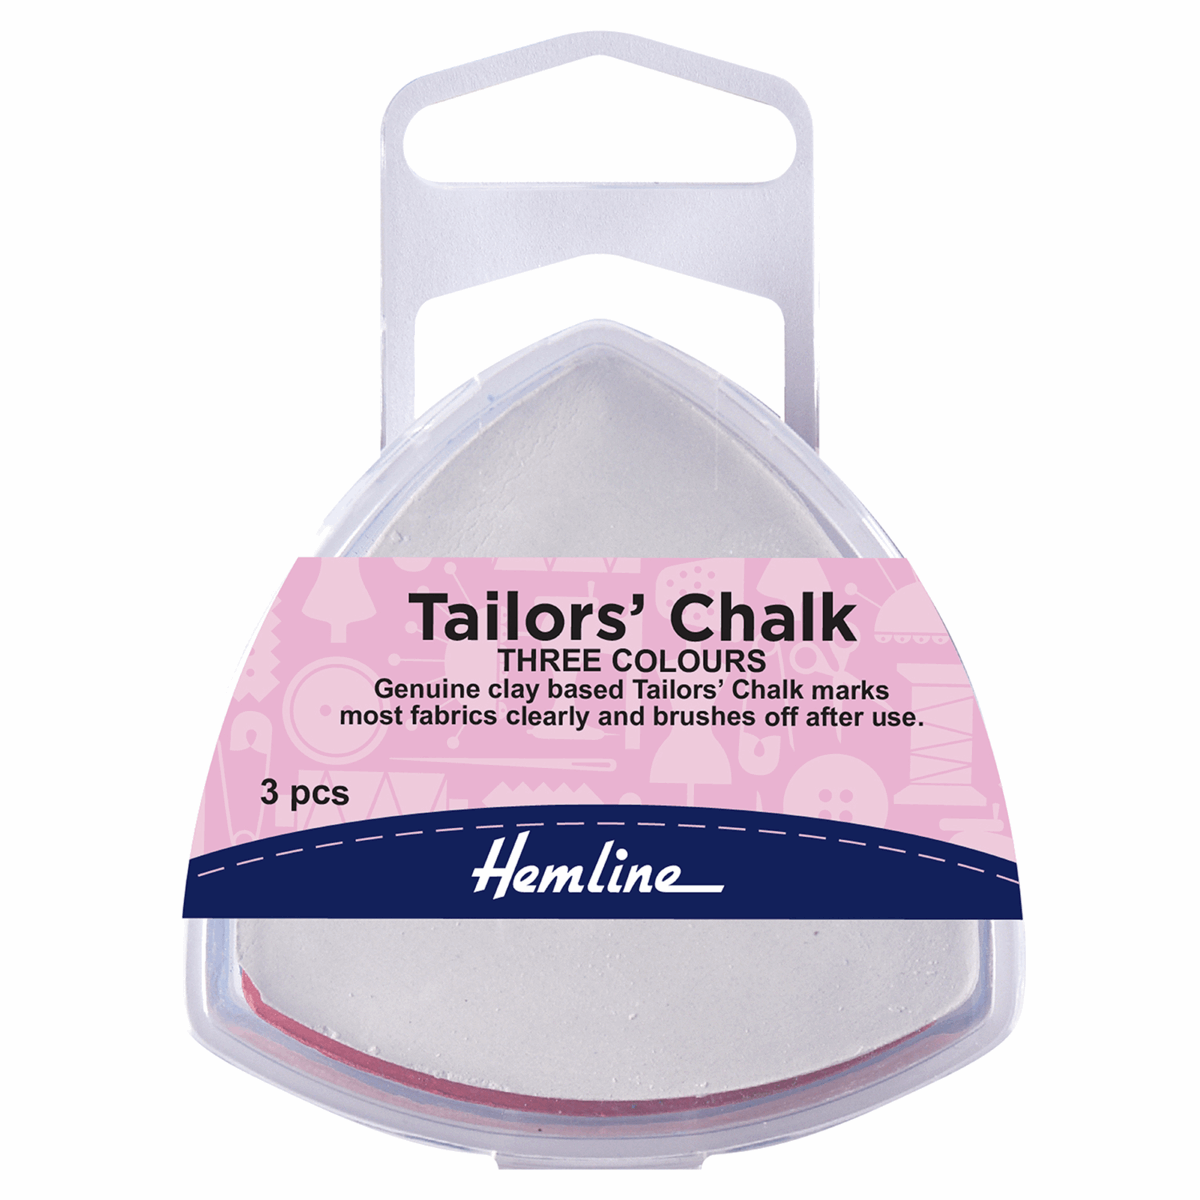 Hemline Tailors’ Chalk